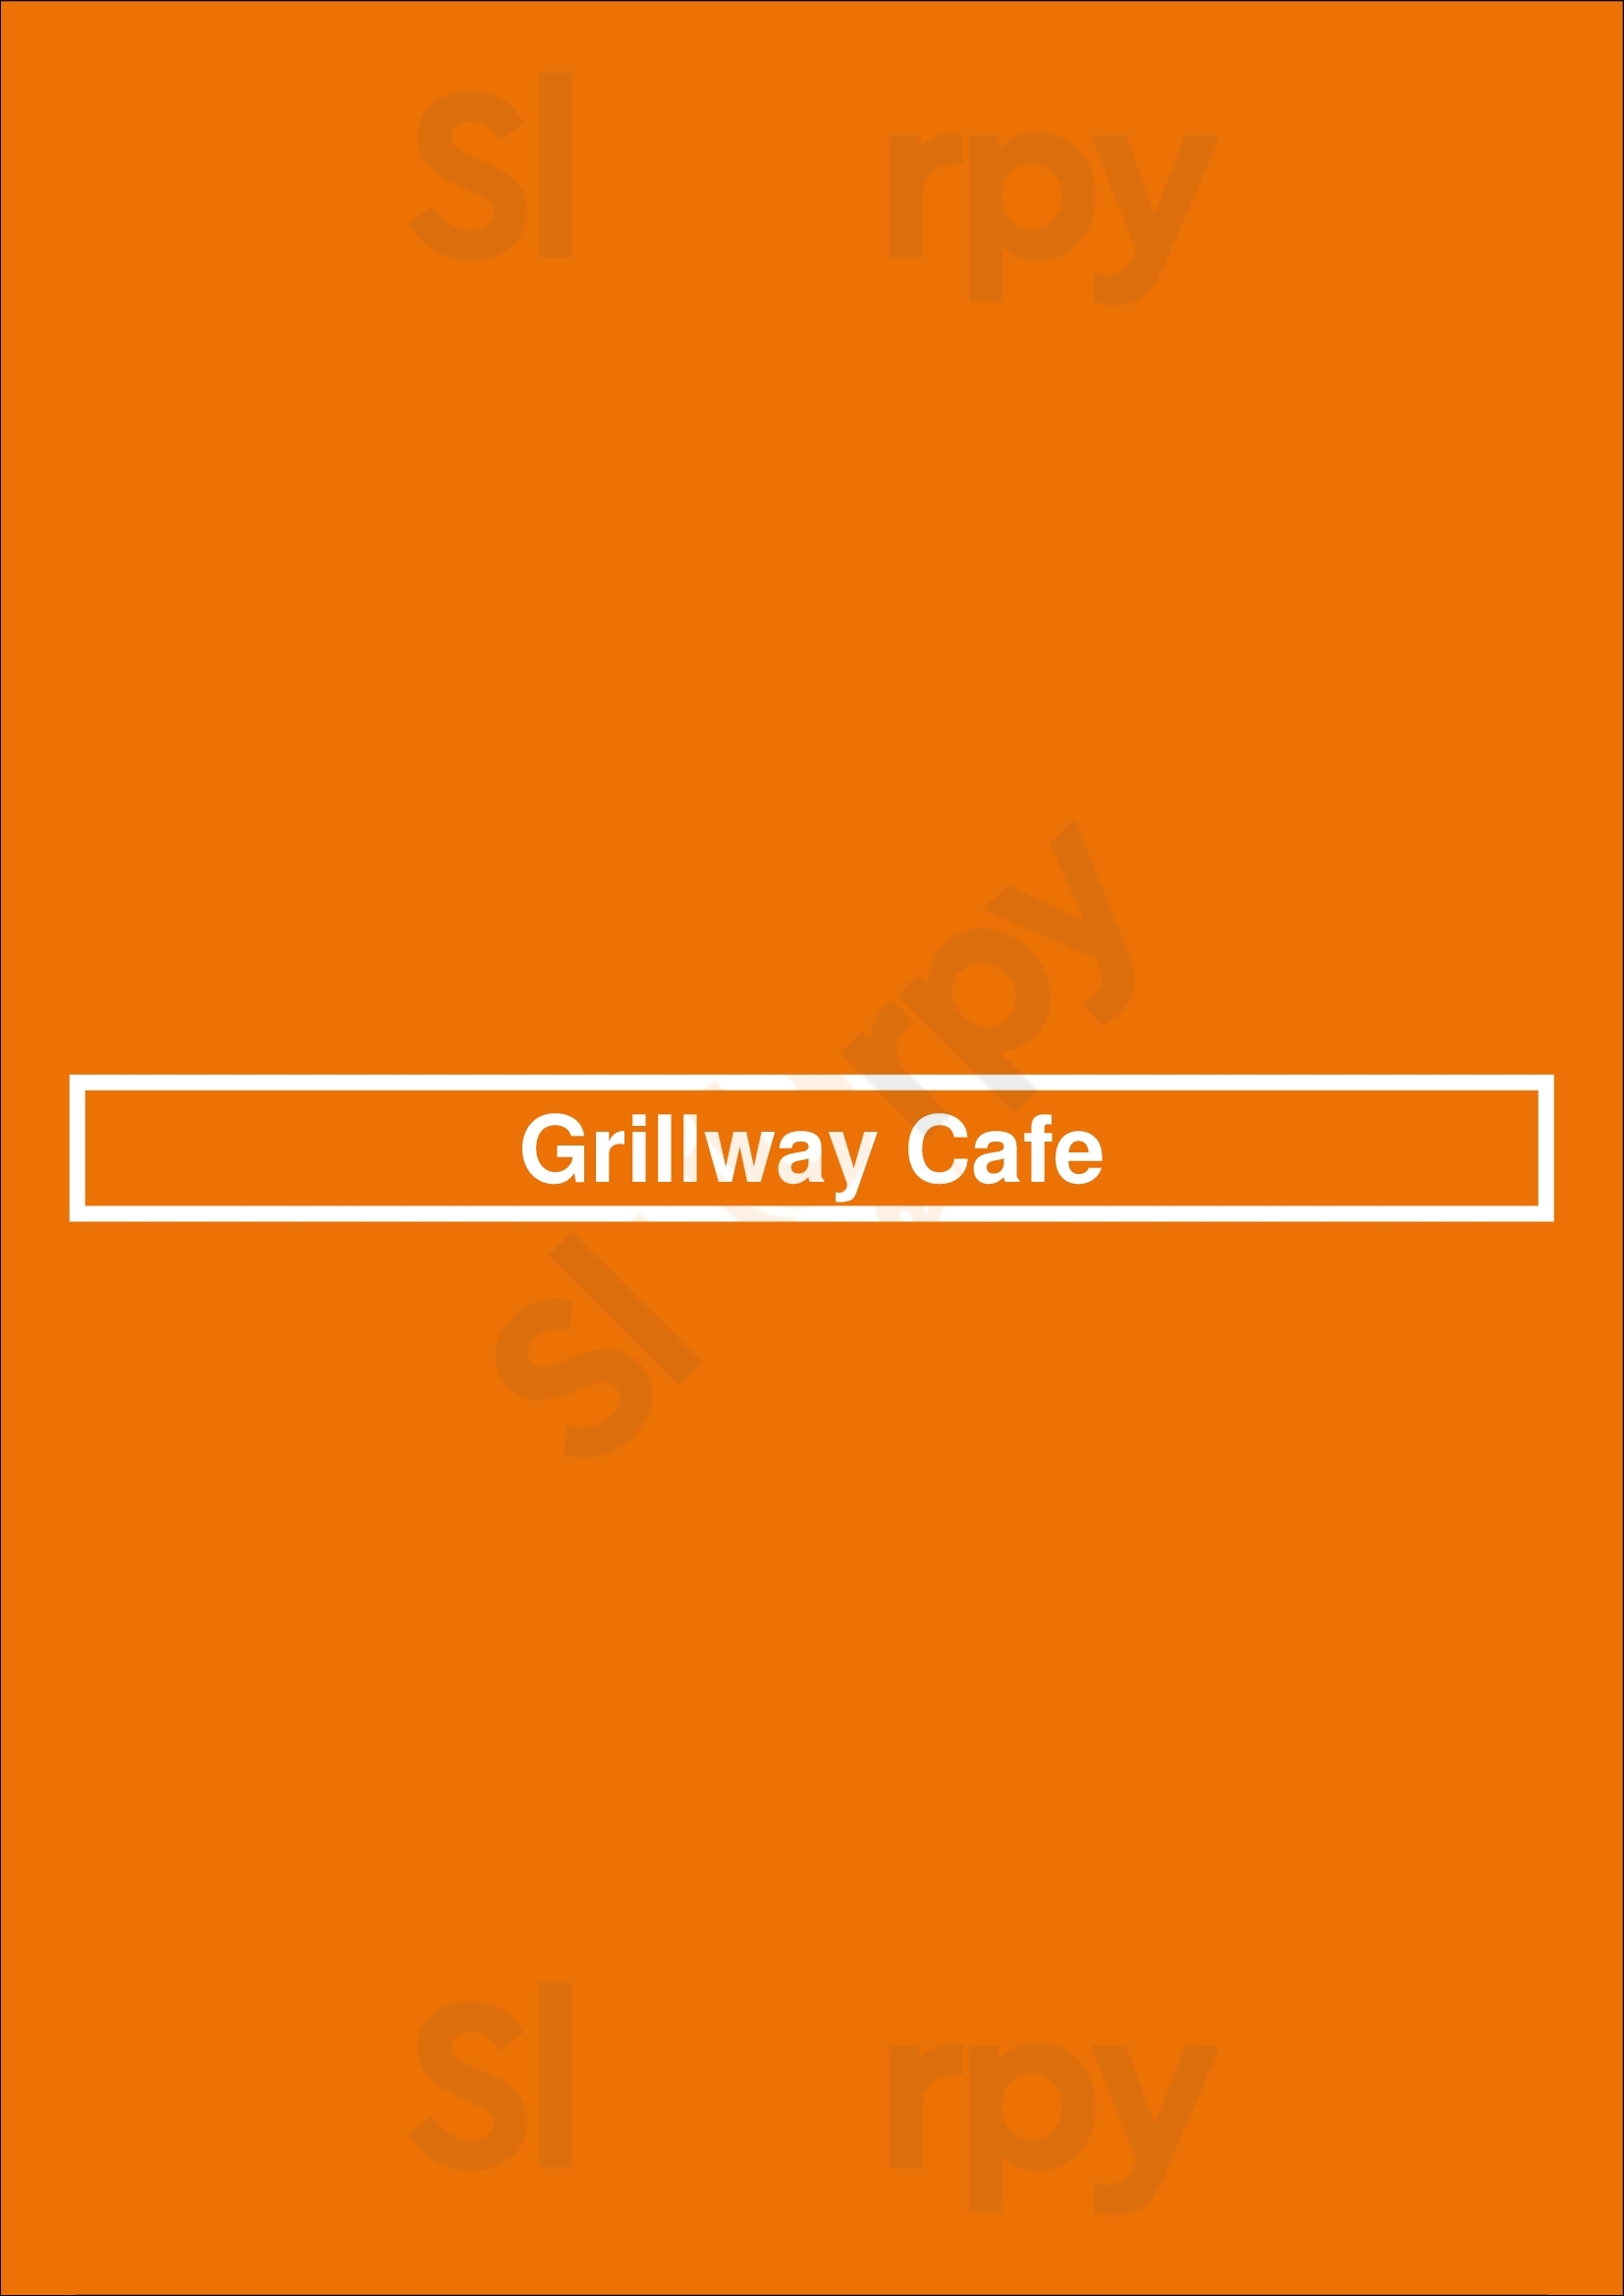 Grillway Cafe Toronto Menu - 1